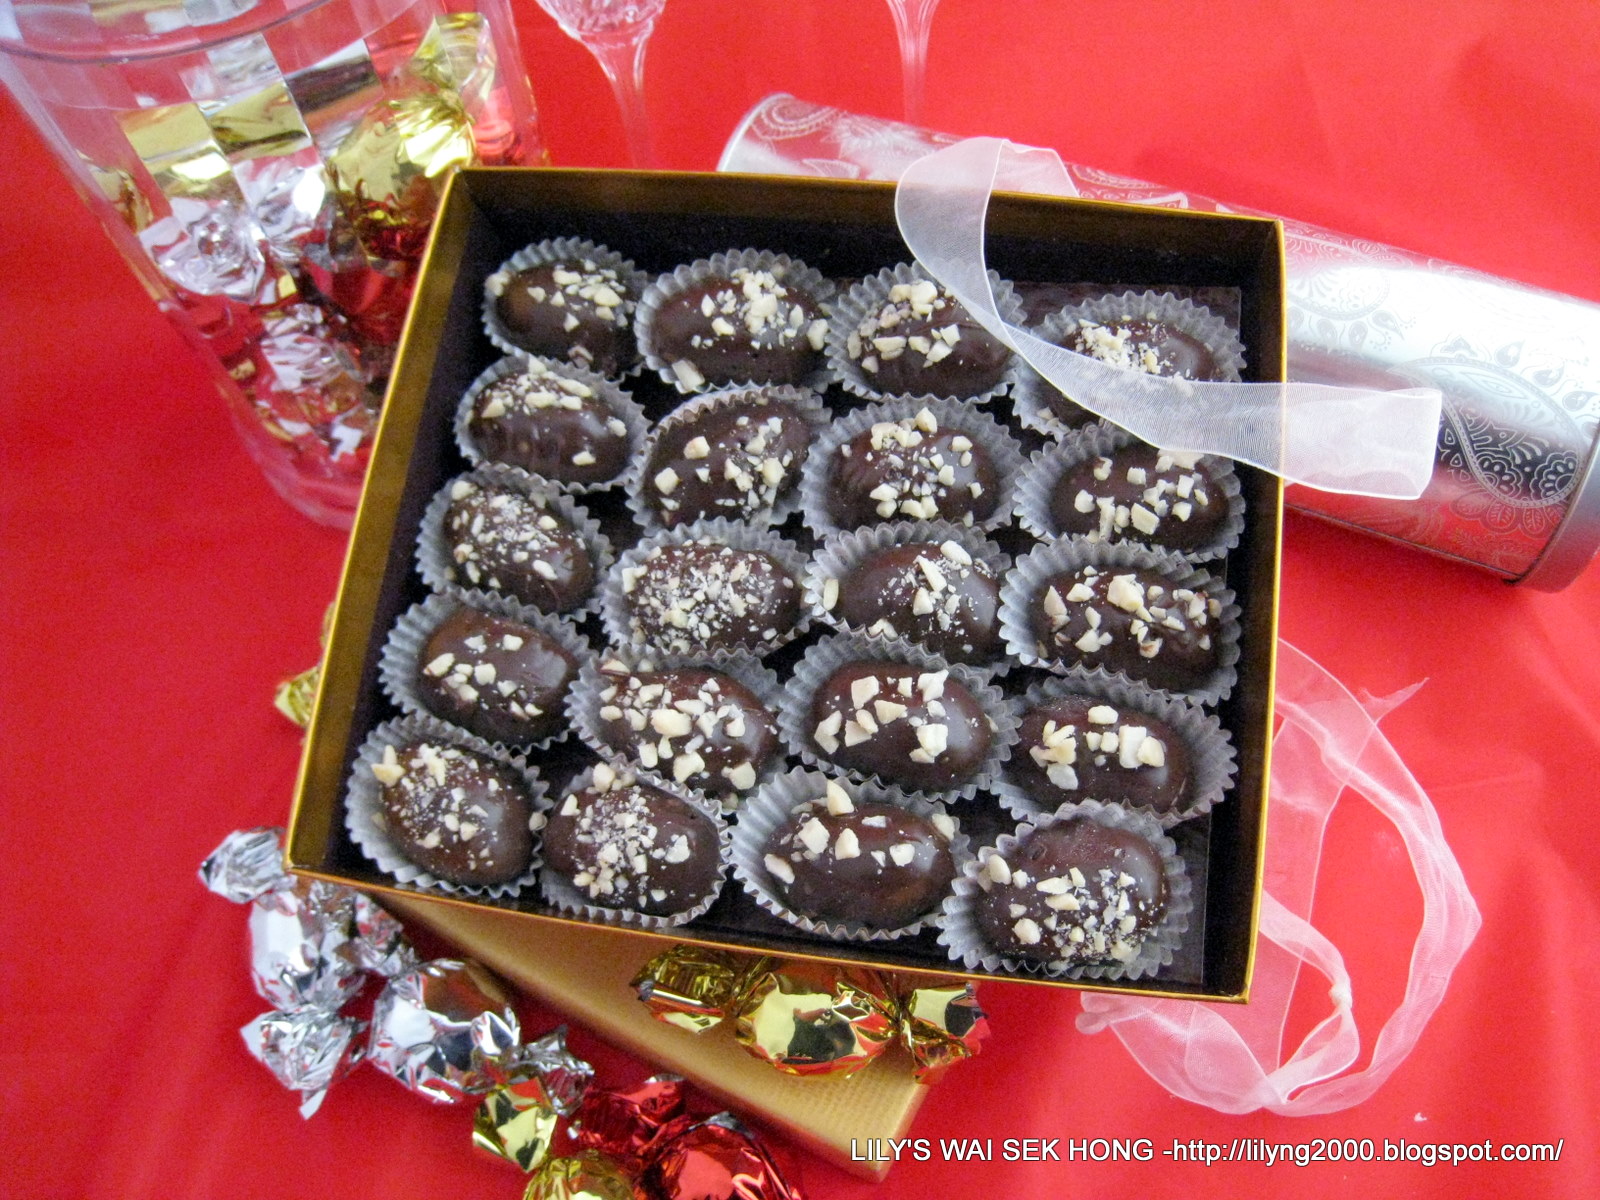 Lily's Wai Sek Hong - Favorites: Almond London Cookies